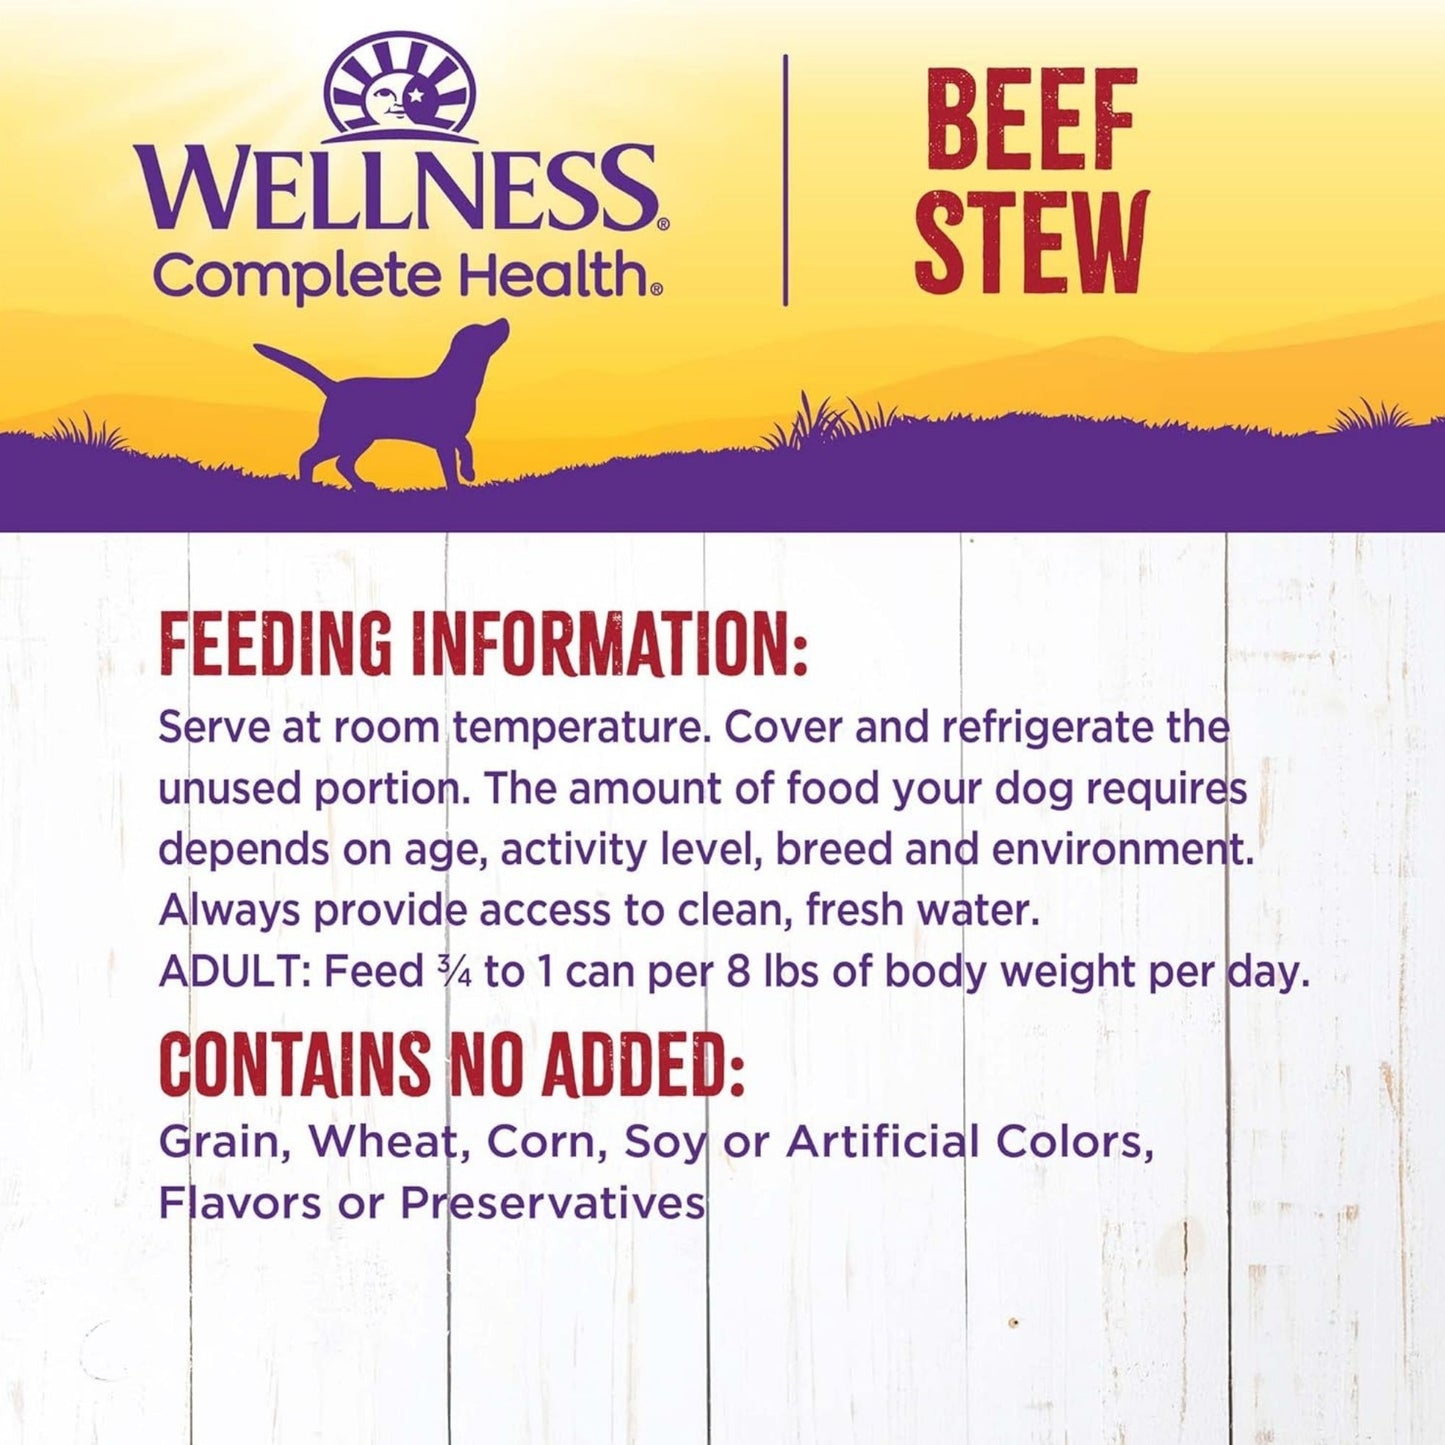 Wellness Dog Complete Health Stew Beef Carrot Potato 12.5oz. (Case of 12)